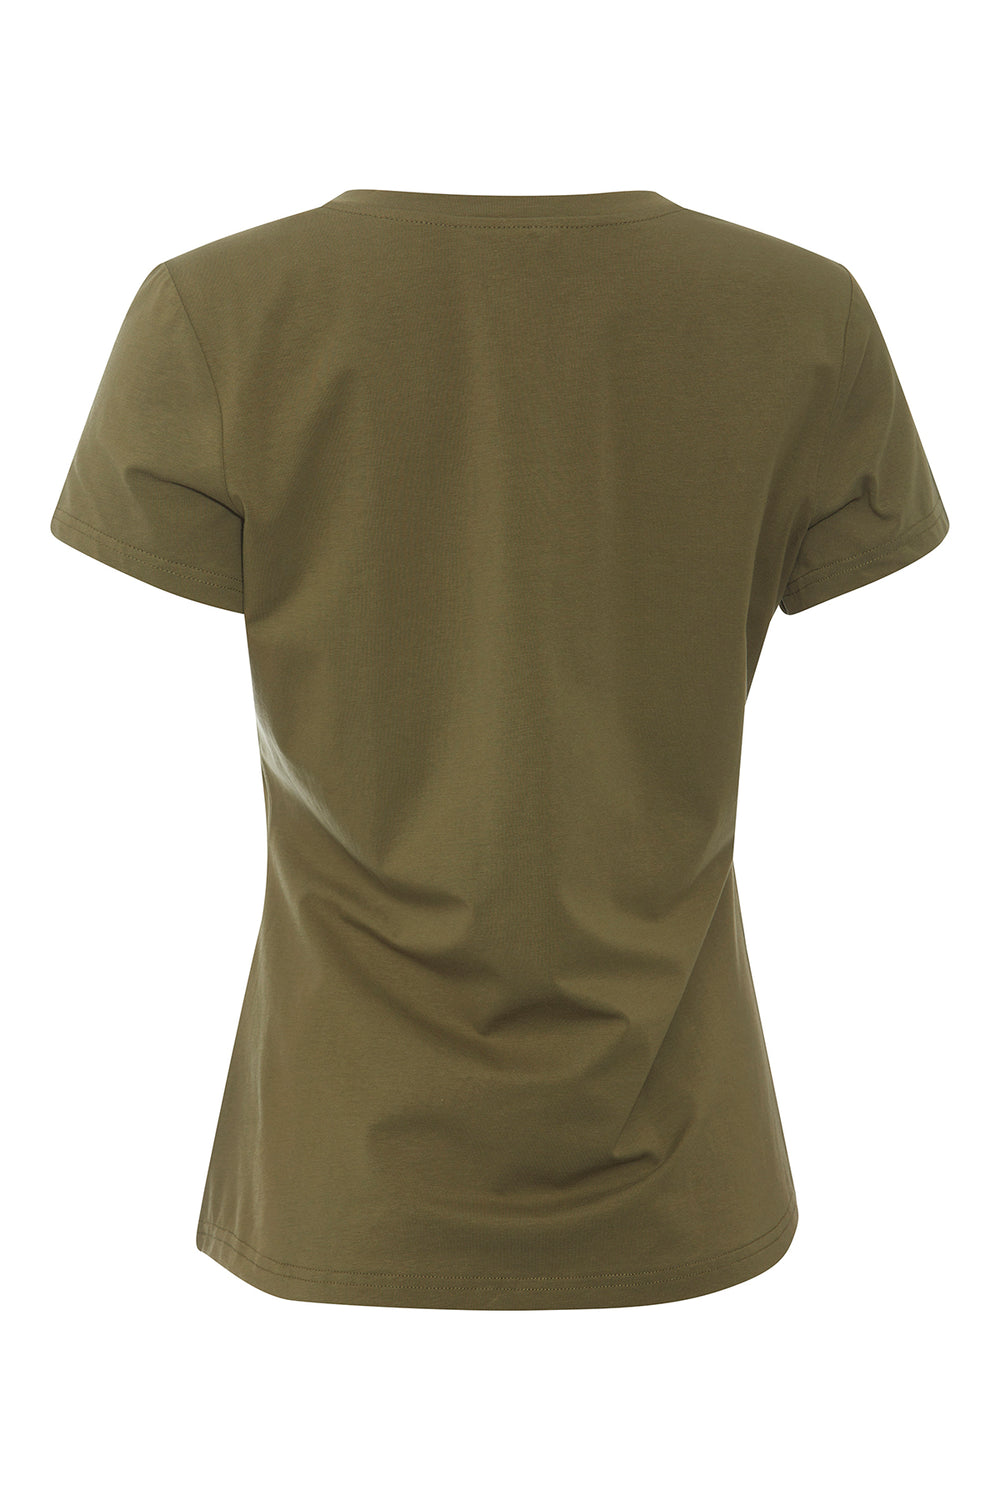 PBO Phio T-shirt T-SHIRTS 516 Burnt olive